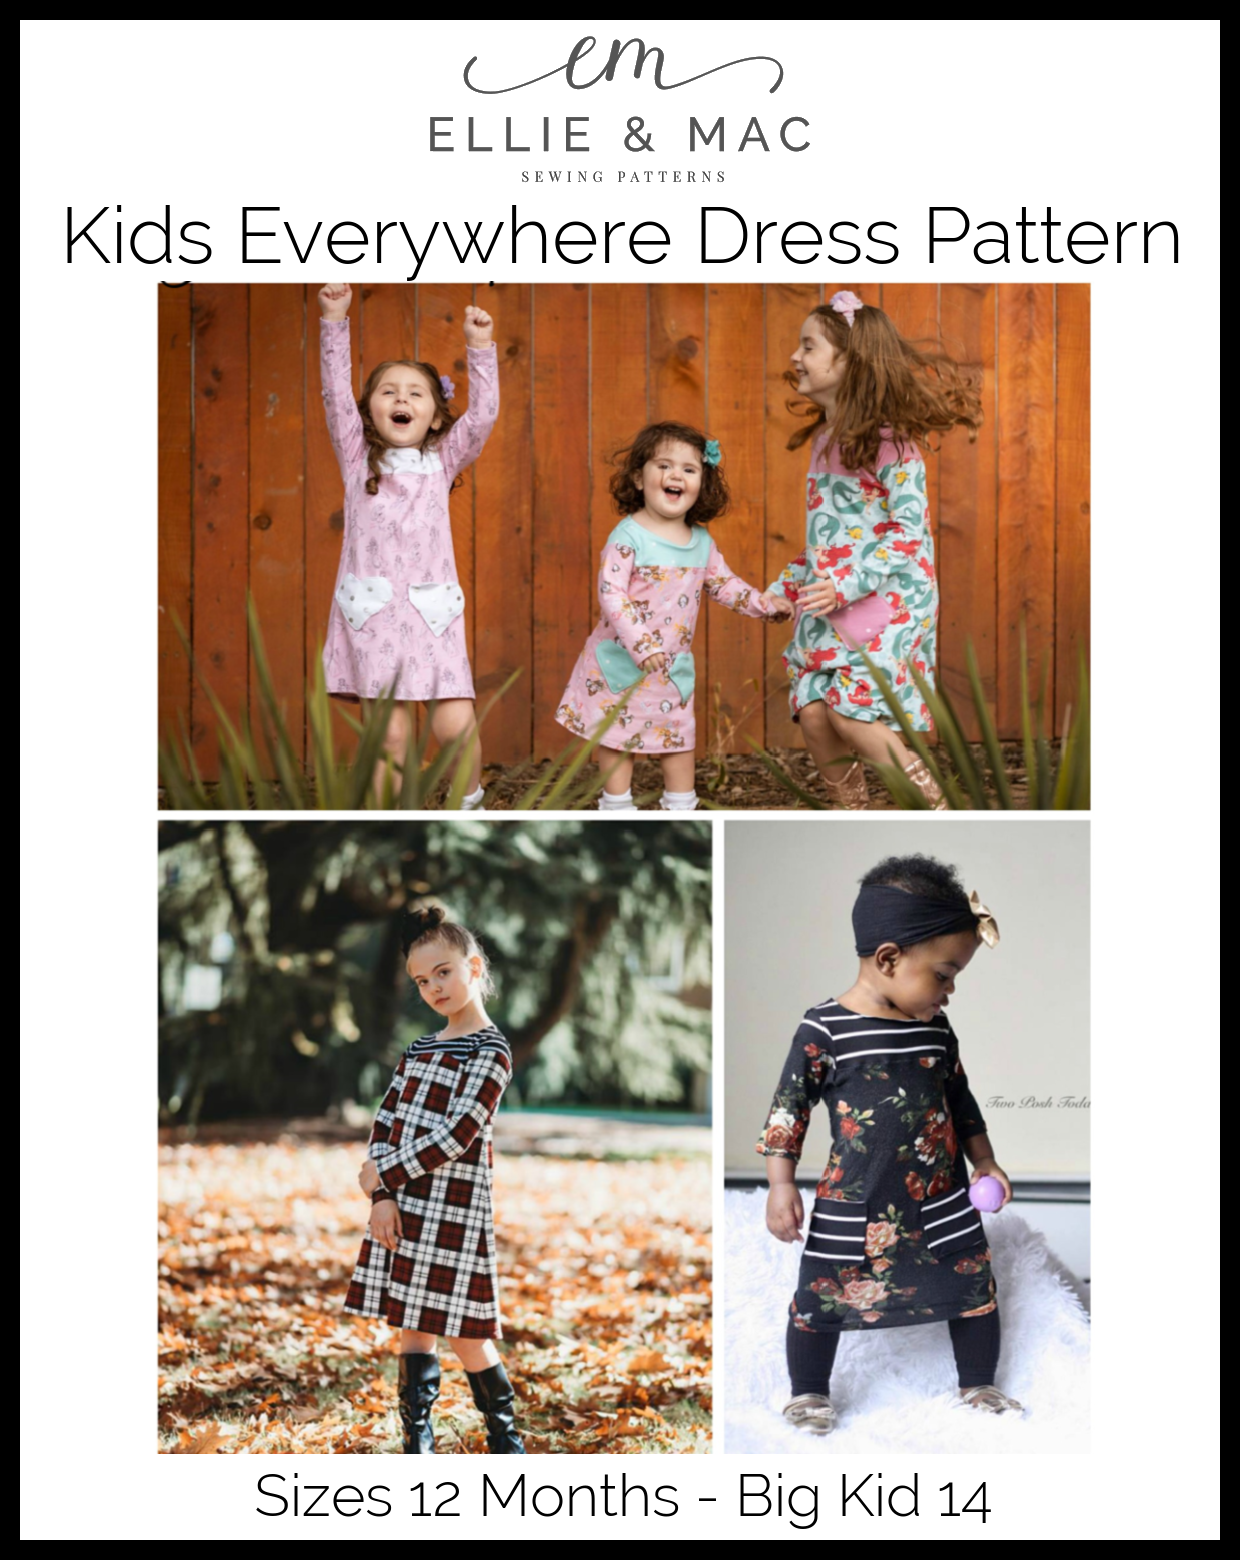 Everywhere Dress Pattern (kid's)